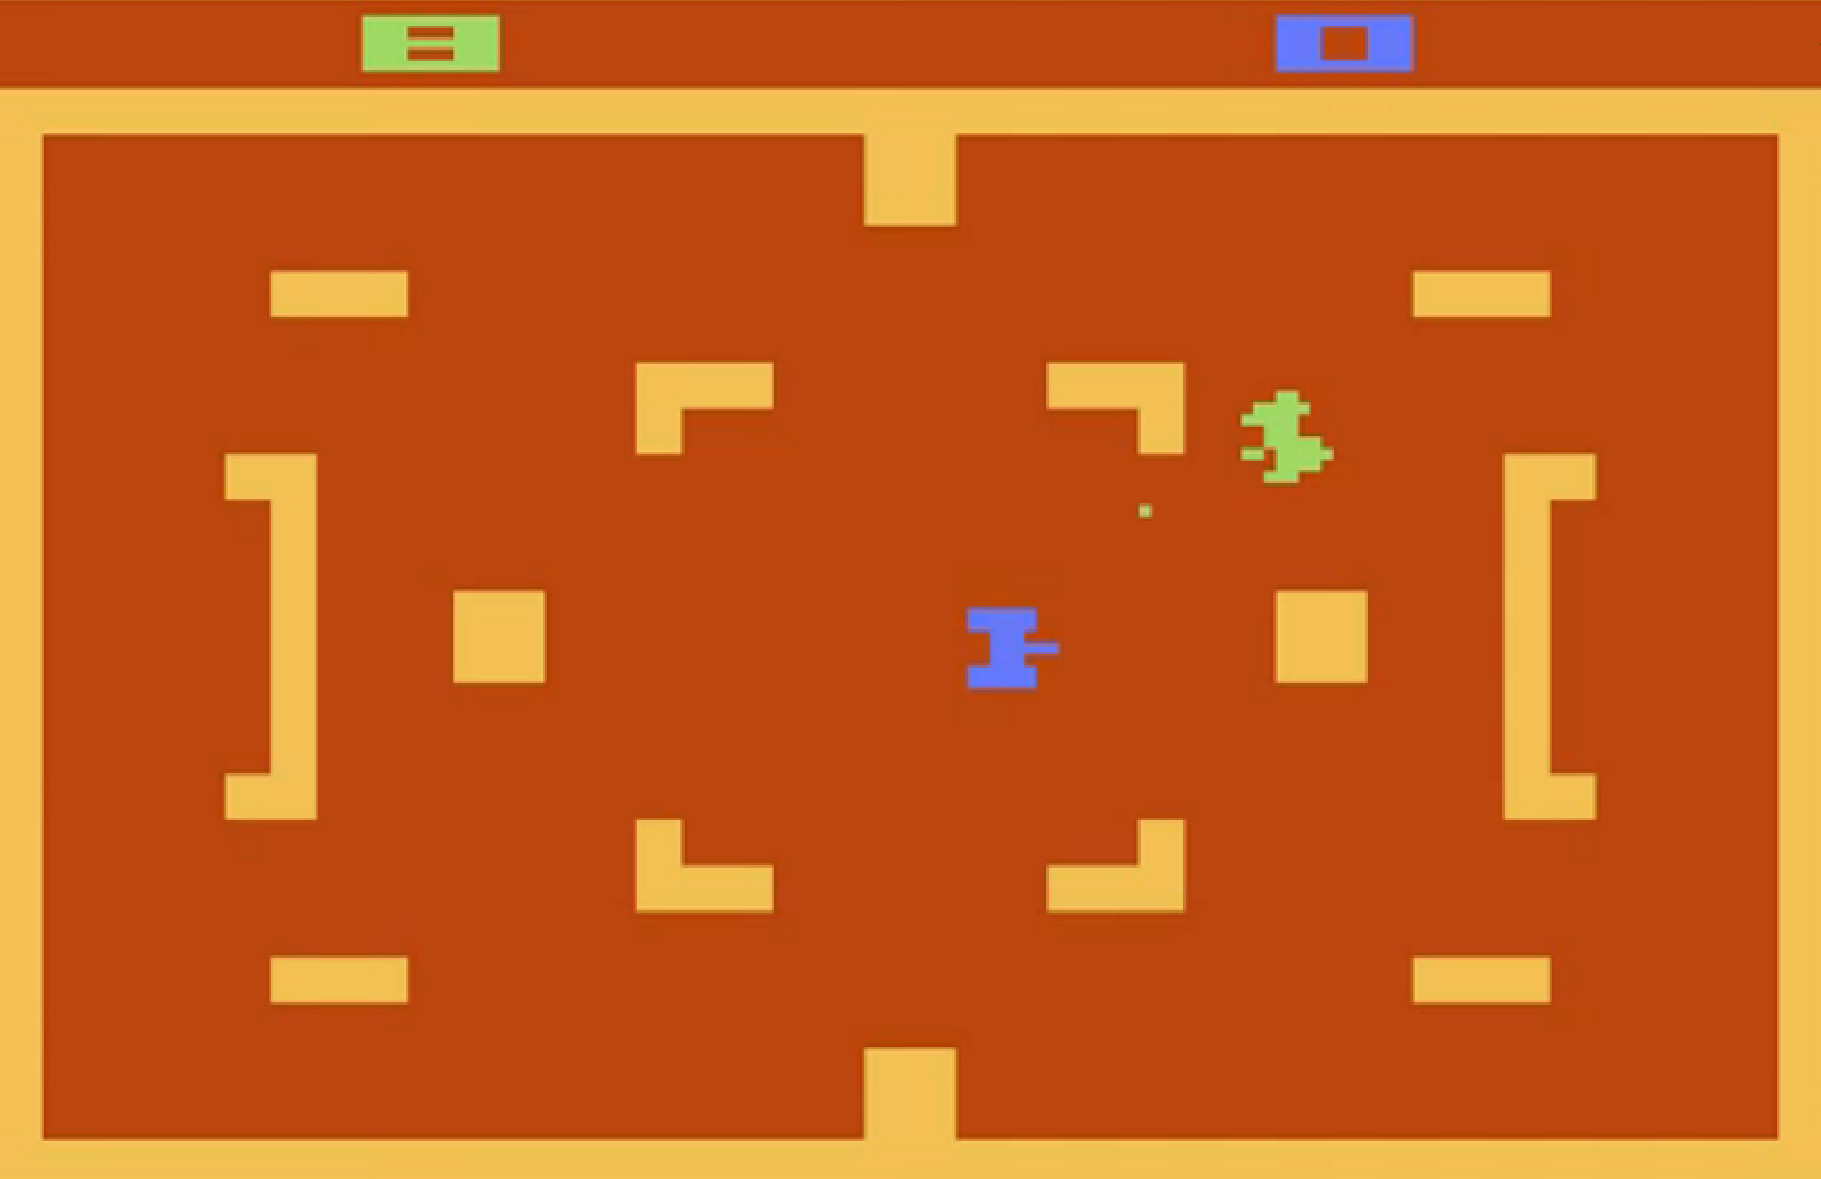 Combat on the Atari 2600